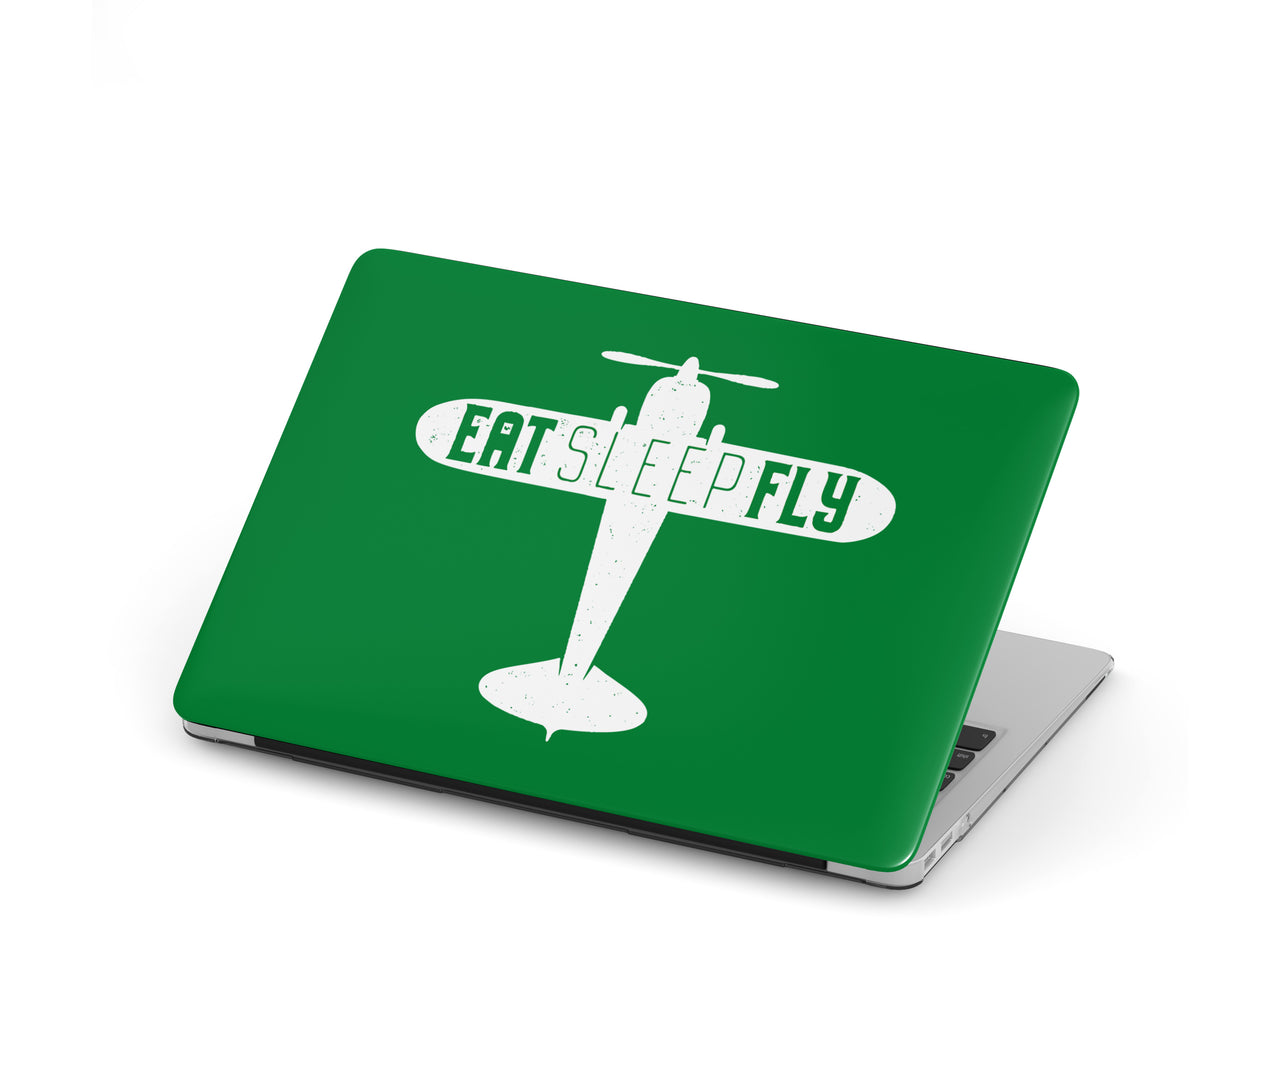 Eat Sleep Fly & Propeller Designed Macbook Cases